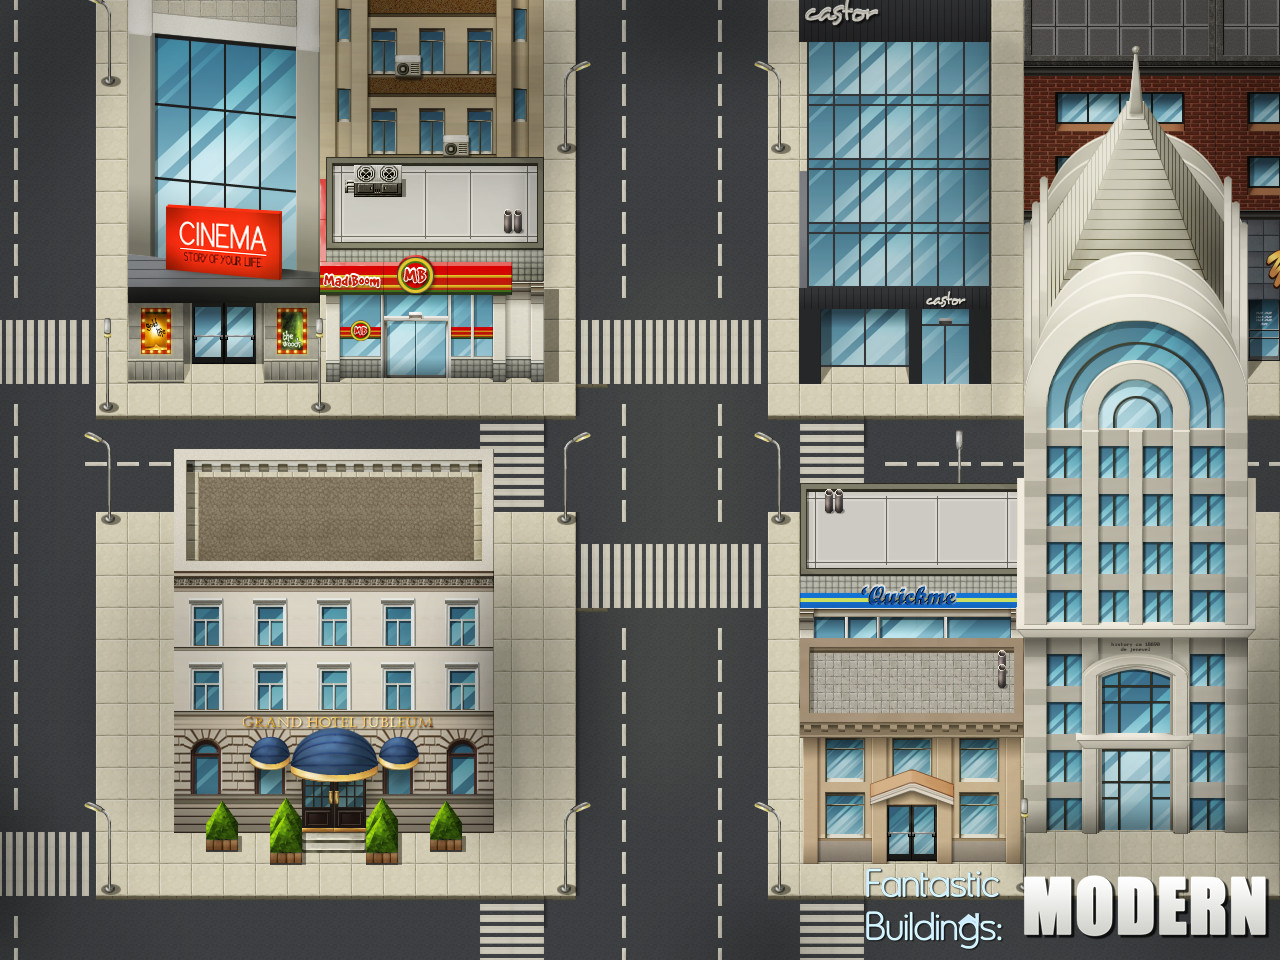 RPG Maker VX - Ace Fantastic Buildings: Modern DLC EU Steam CD Key